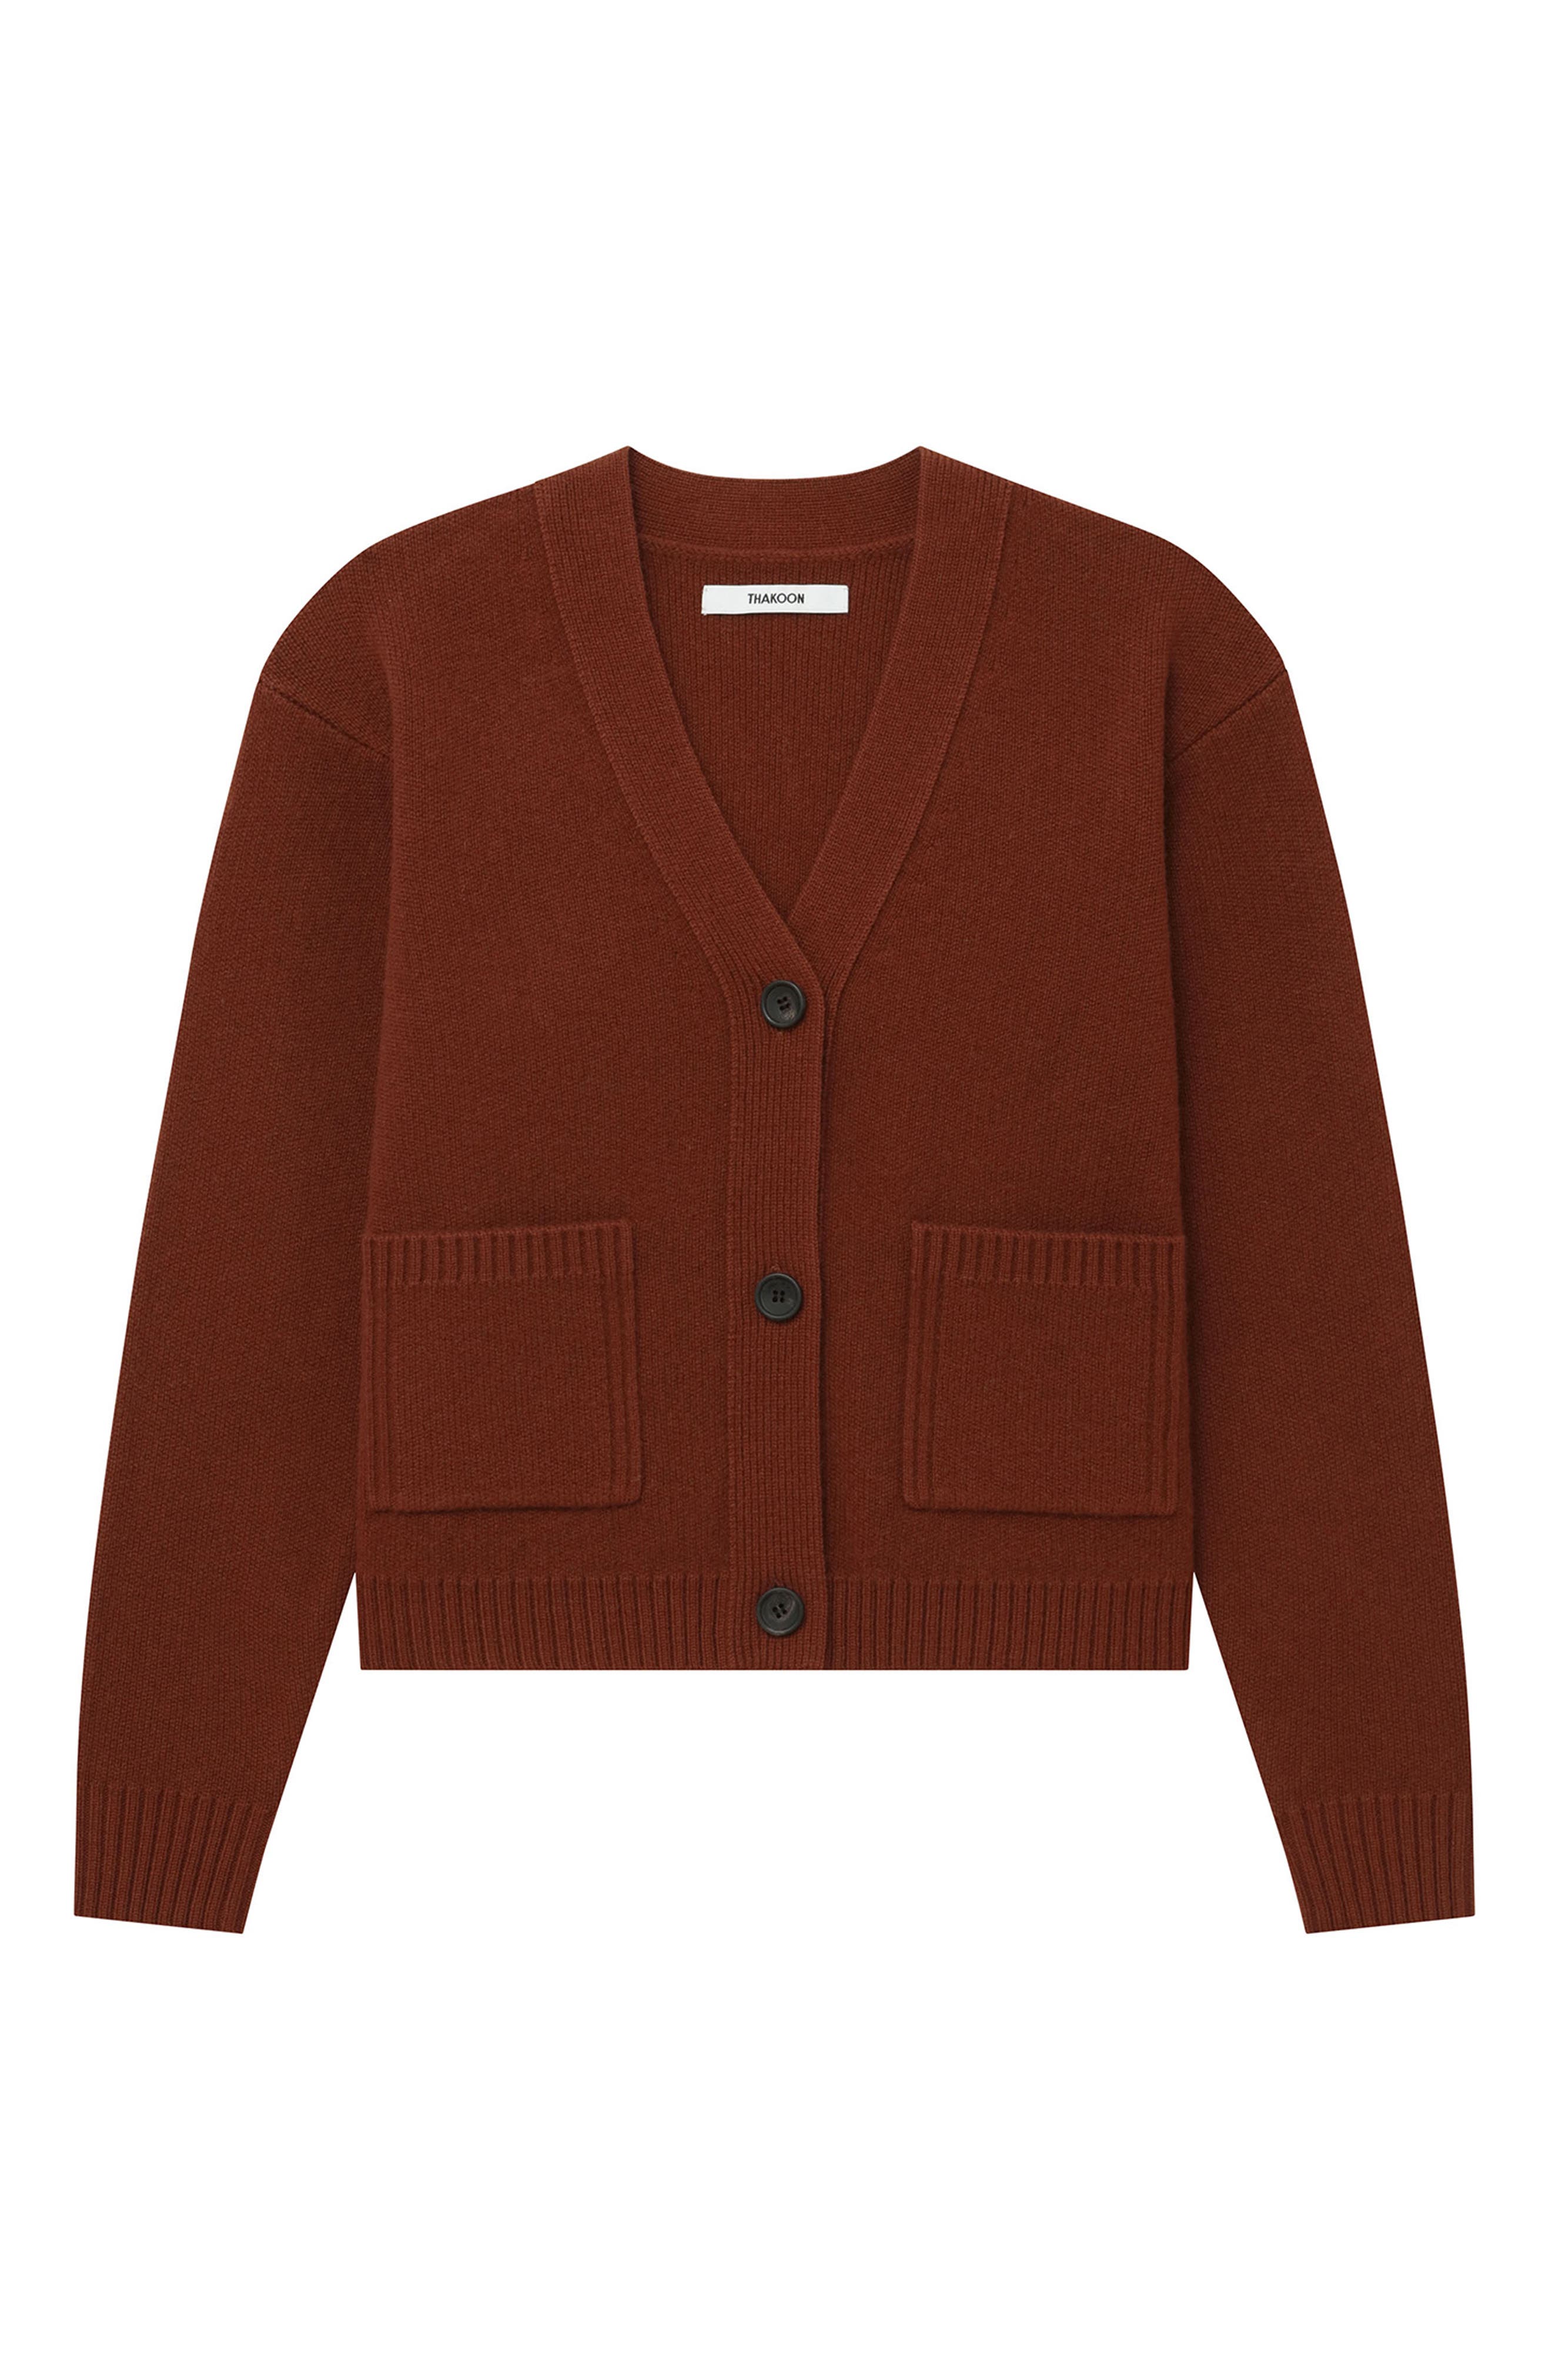 Pendleton Women's XS S Virgin Wool Sweater Cardigan USA Red Vintage Golden Buttons 34 Sleeves Warm